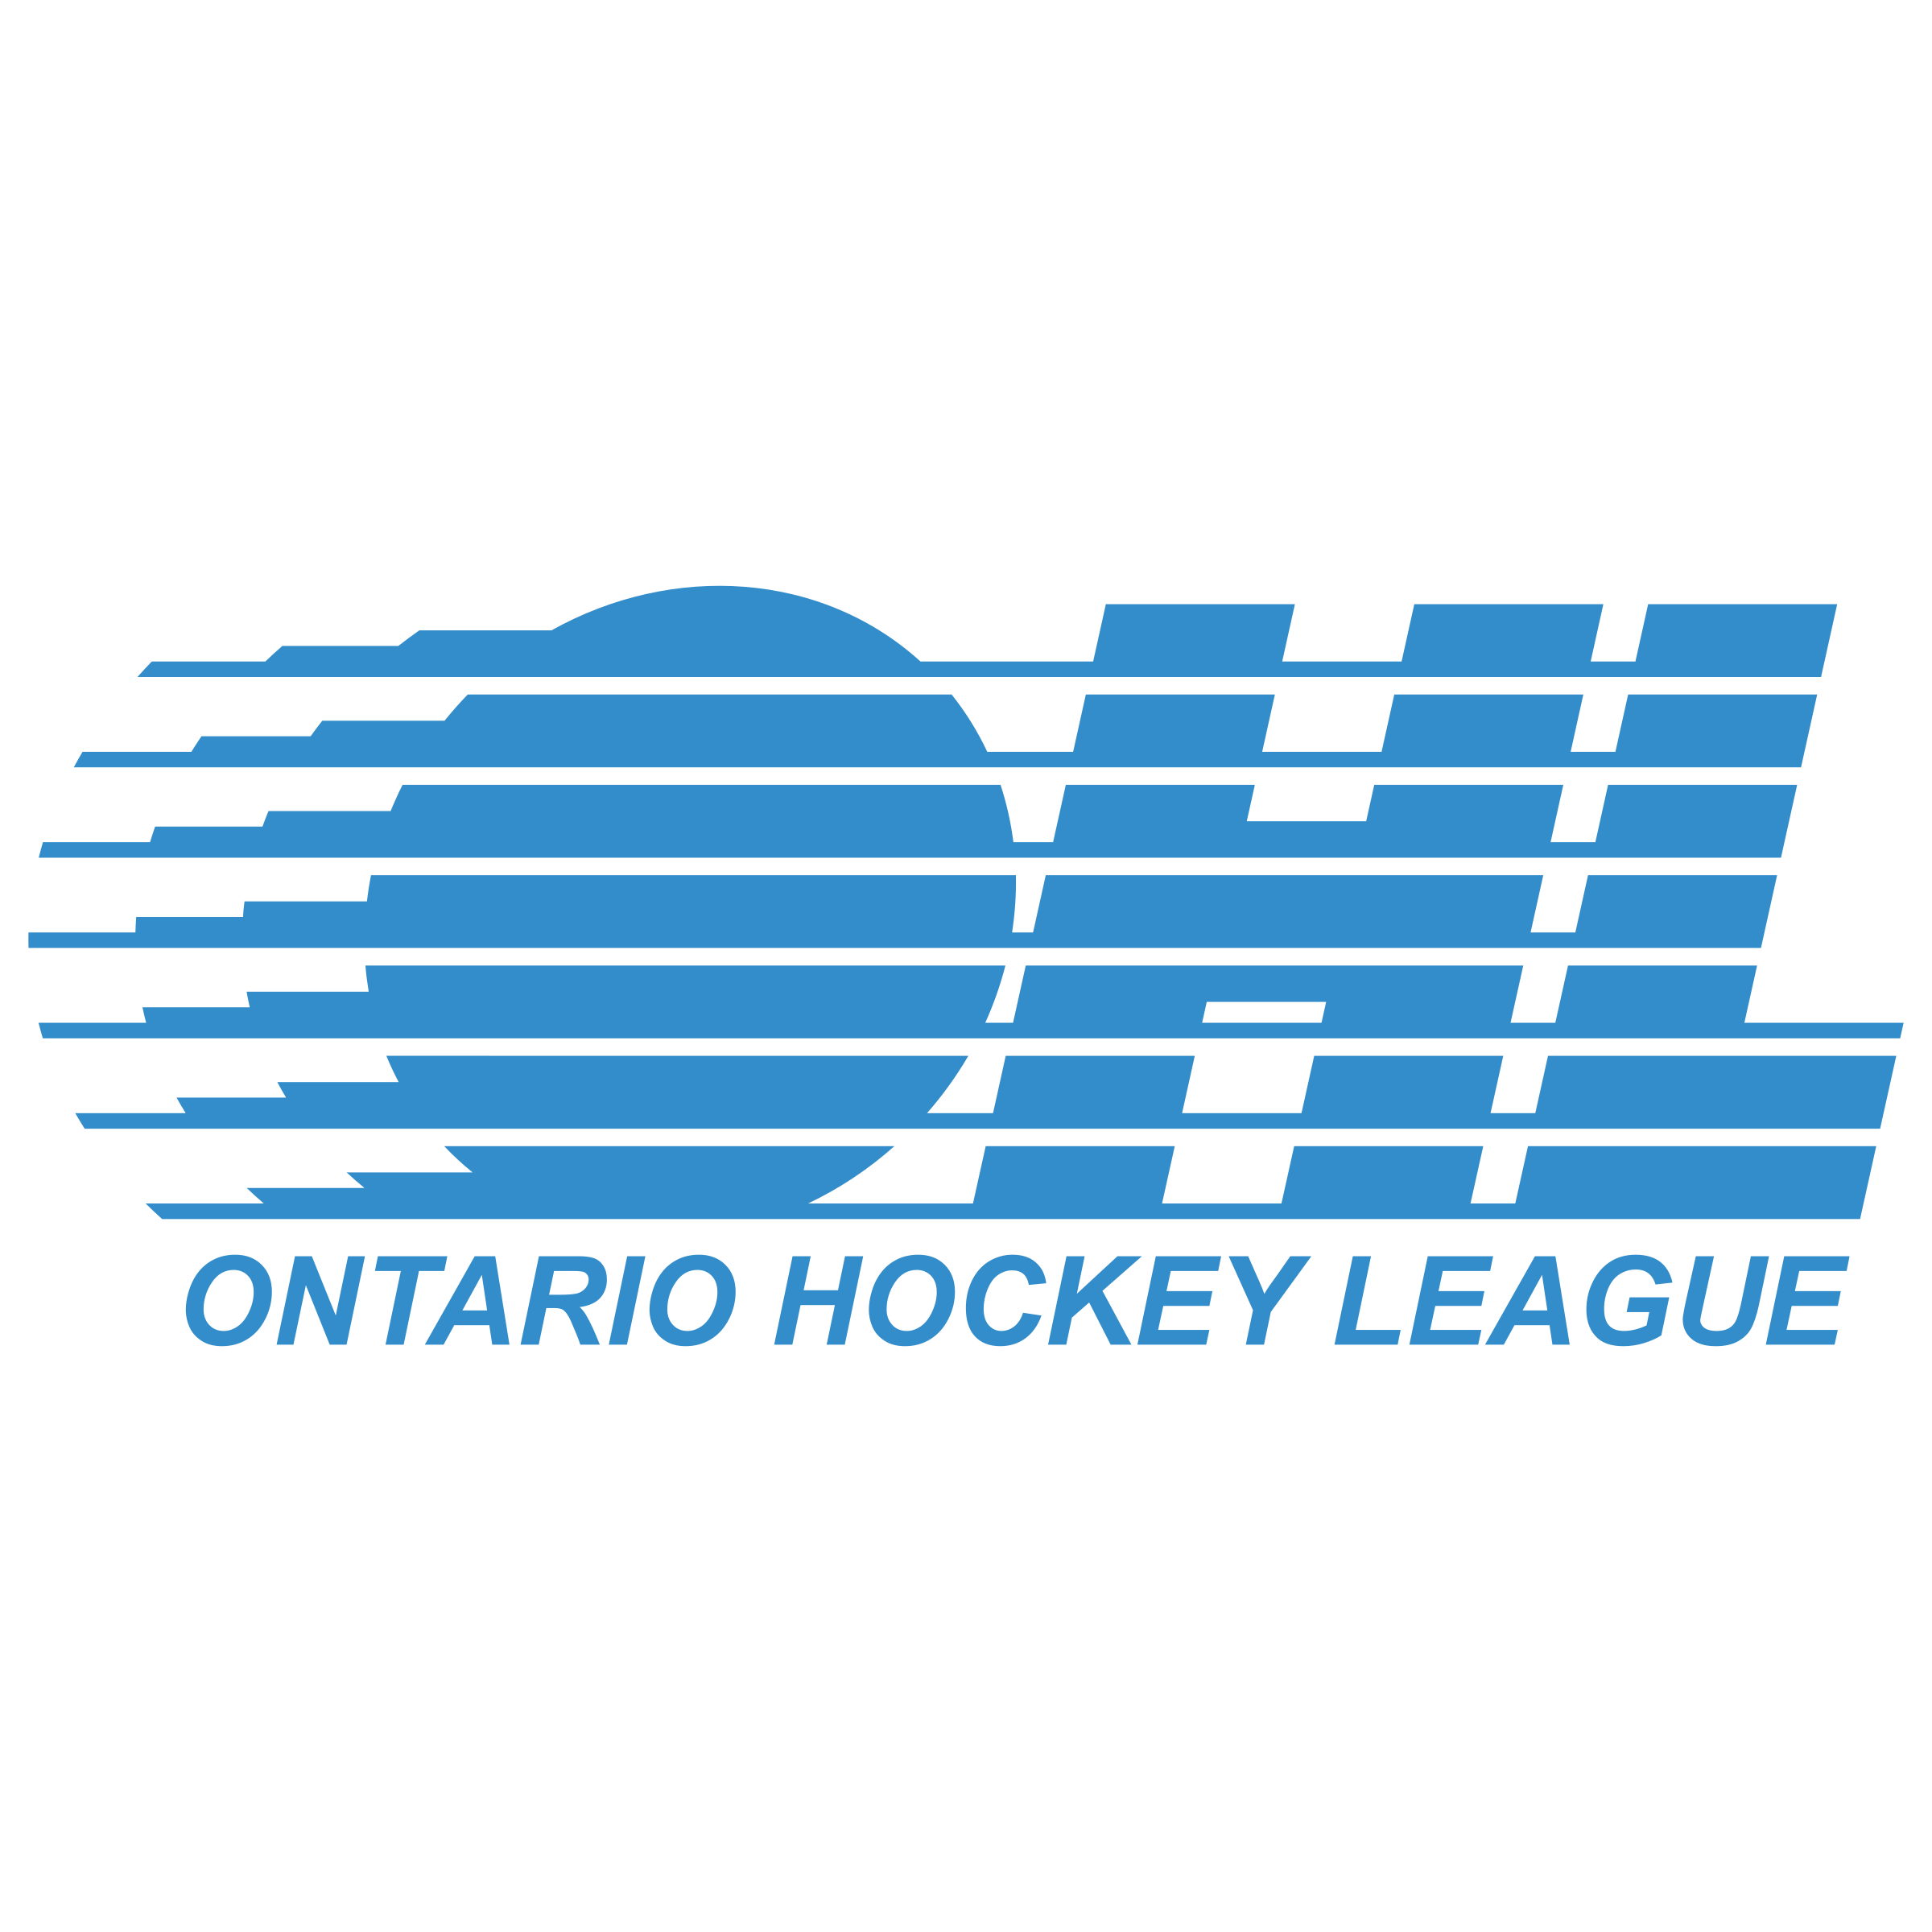 OHL Logo - OHL Logo PNG Transparent & SVG Vector - Freebie Supply